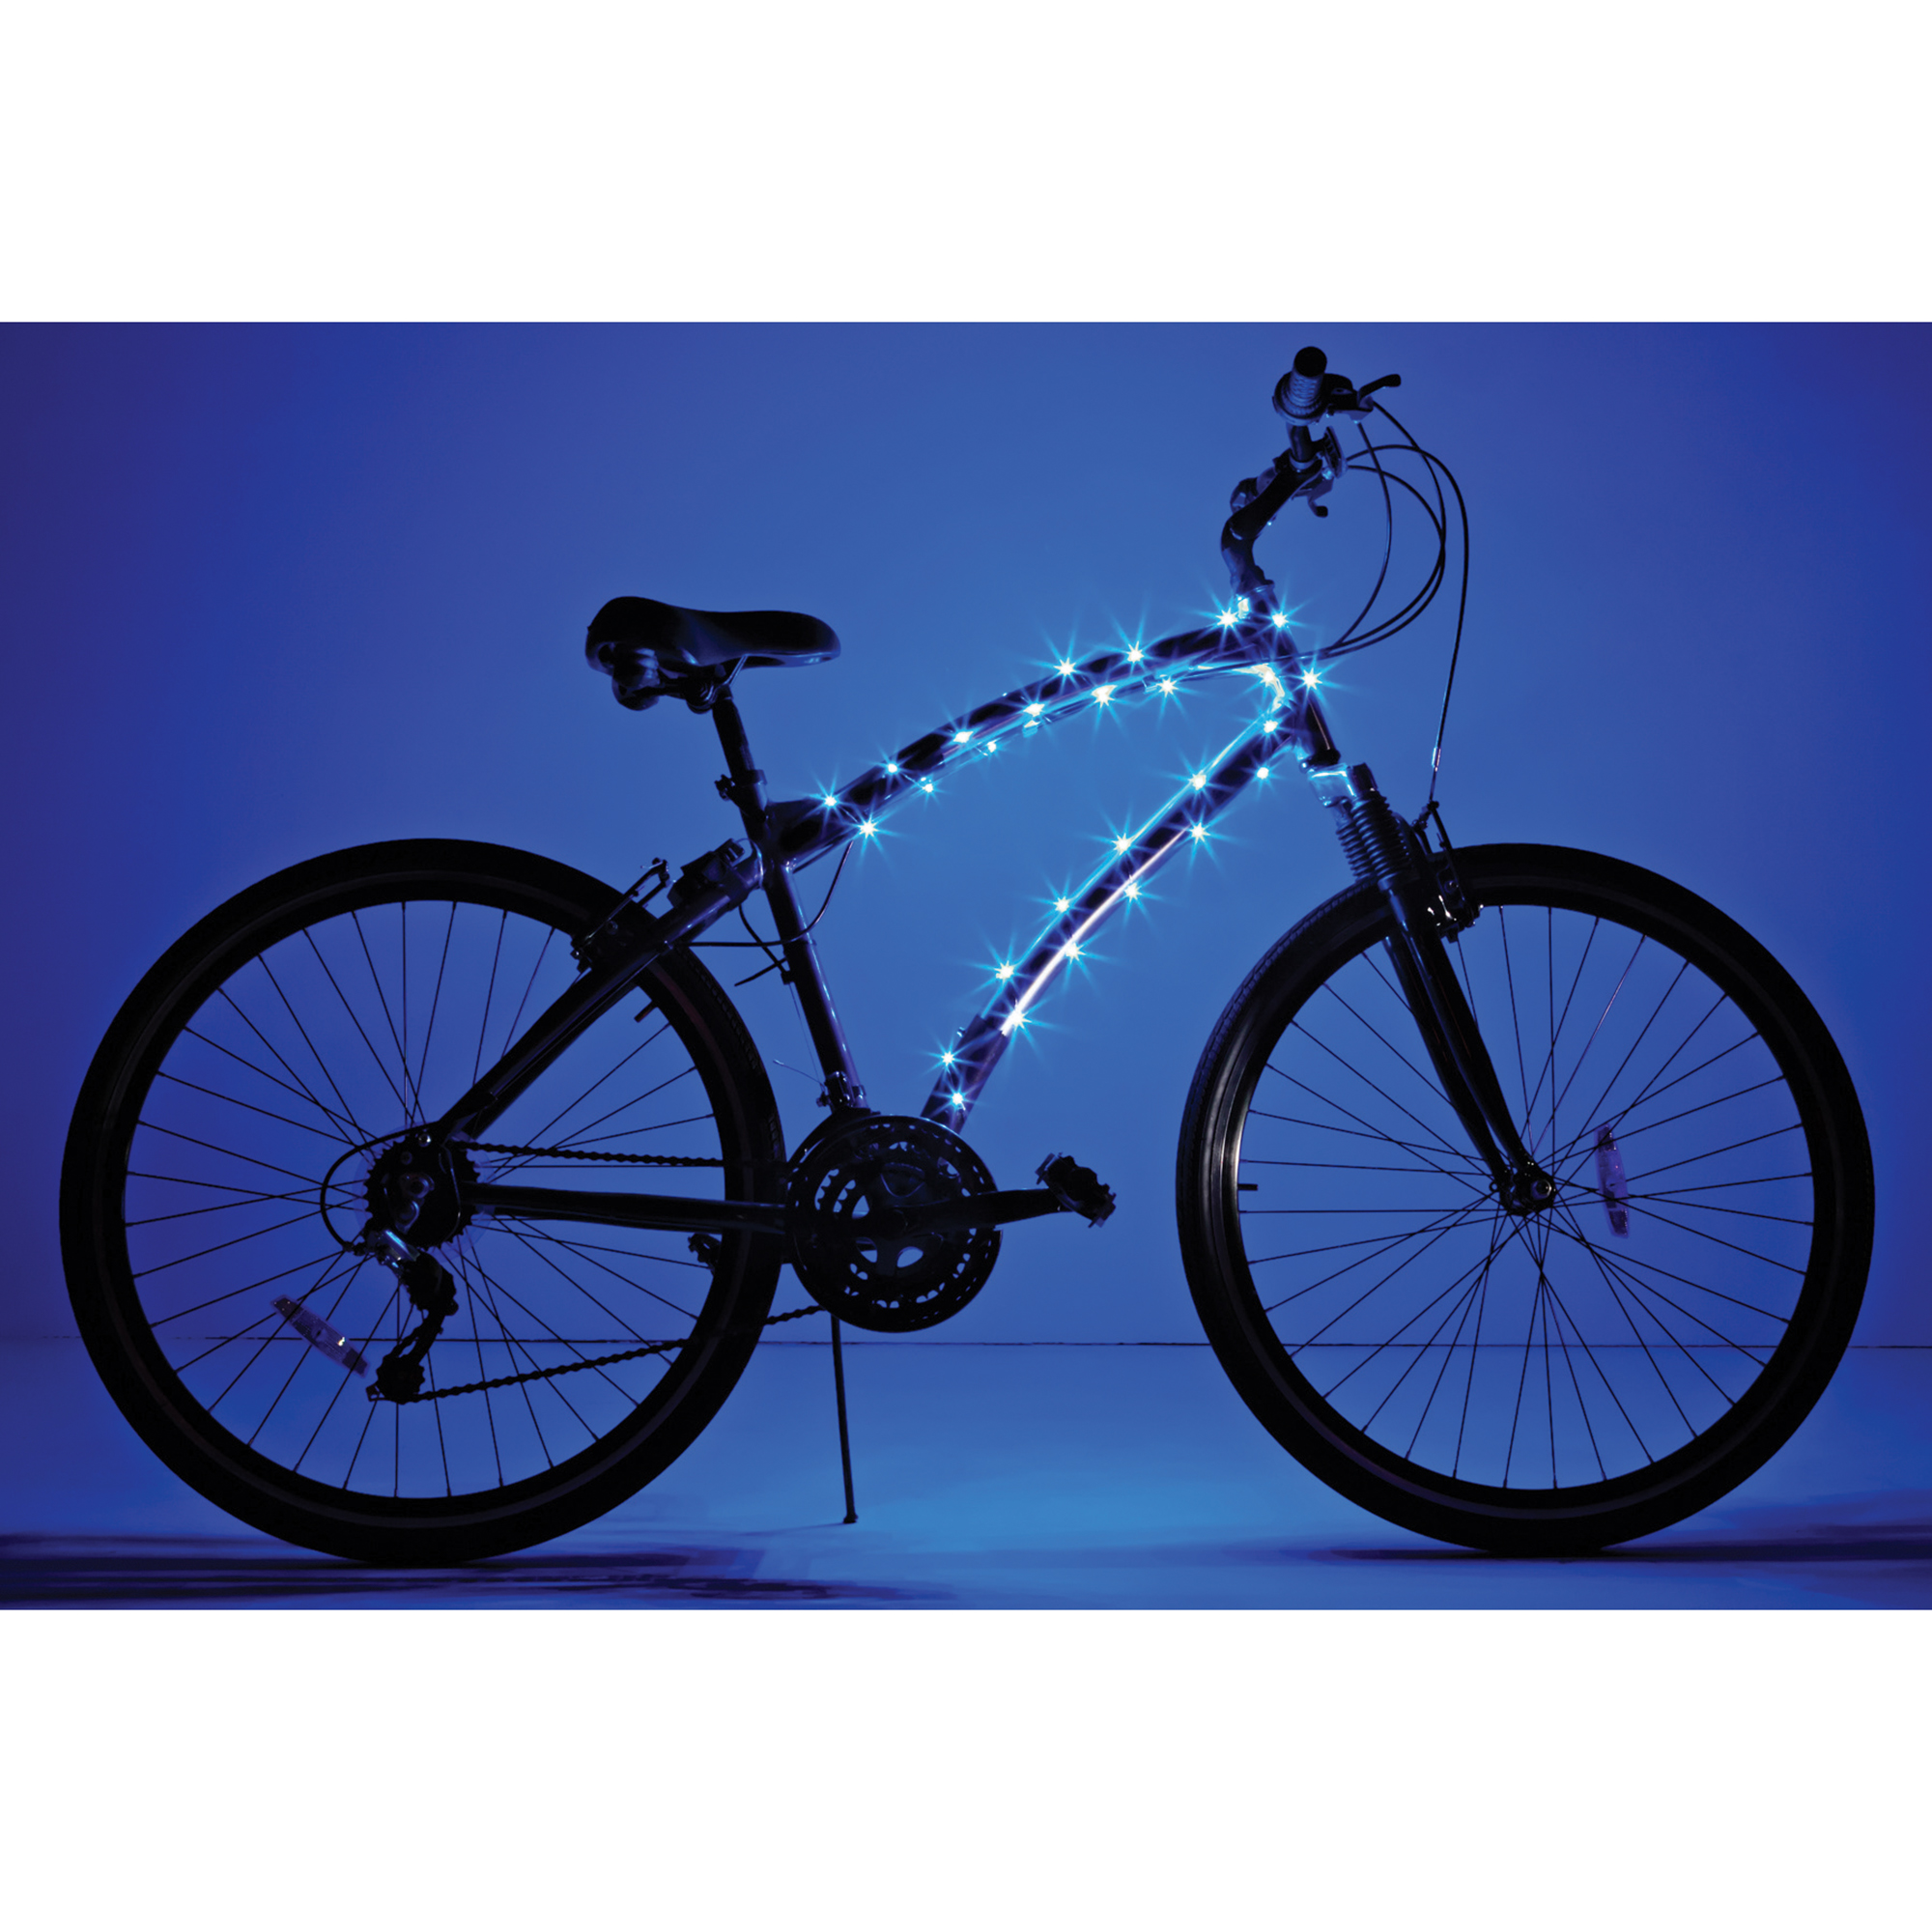 Coscmic Brightz LED Bike Lights, Blue